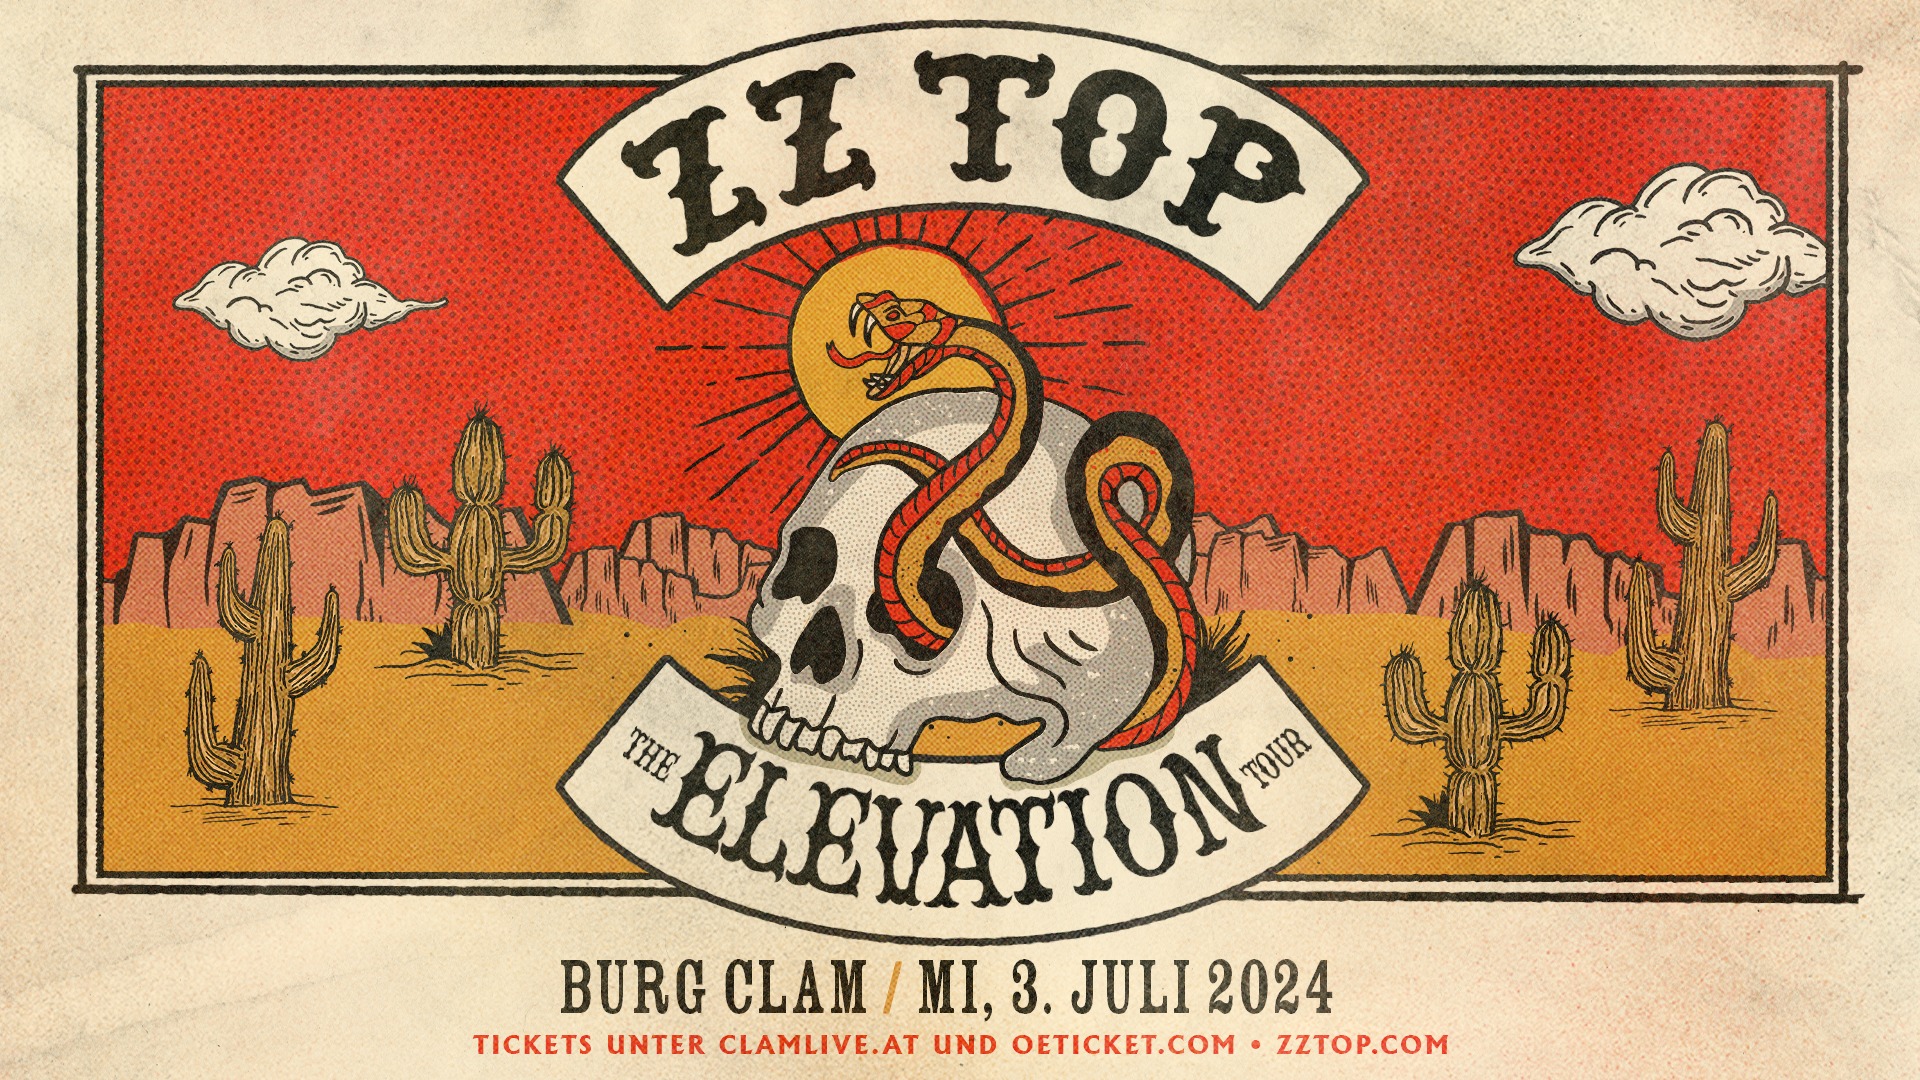 ZZ Top am 3. July 2024 @ Burg Clam.